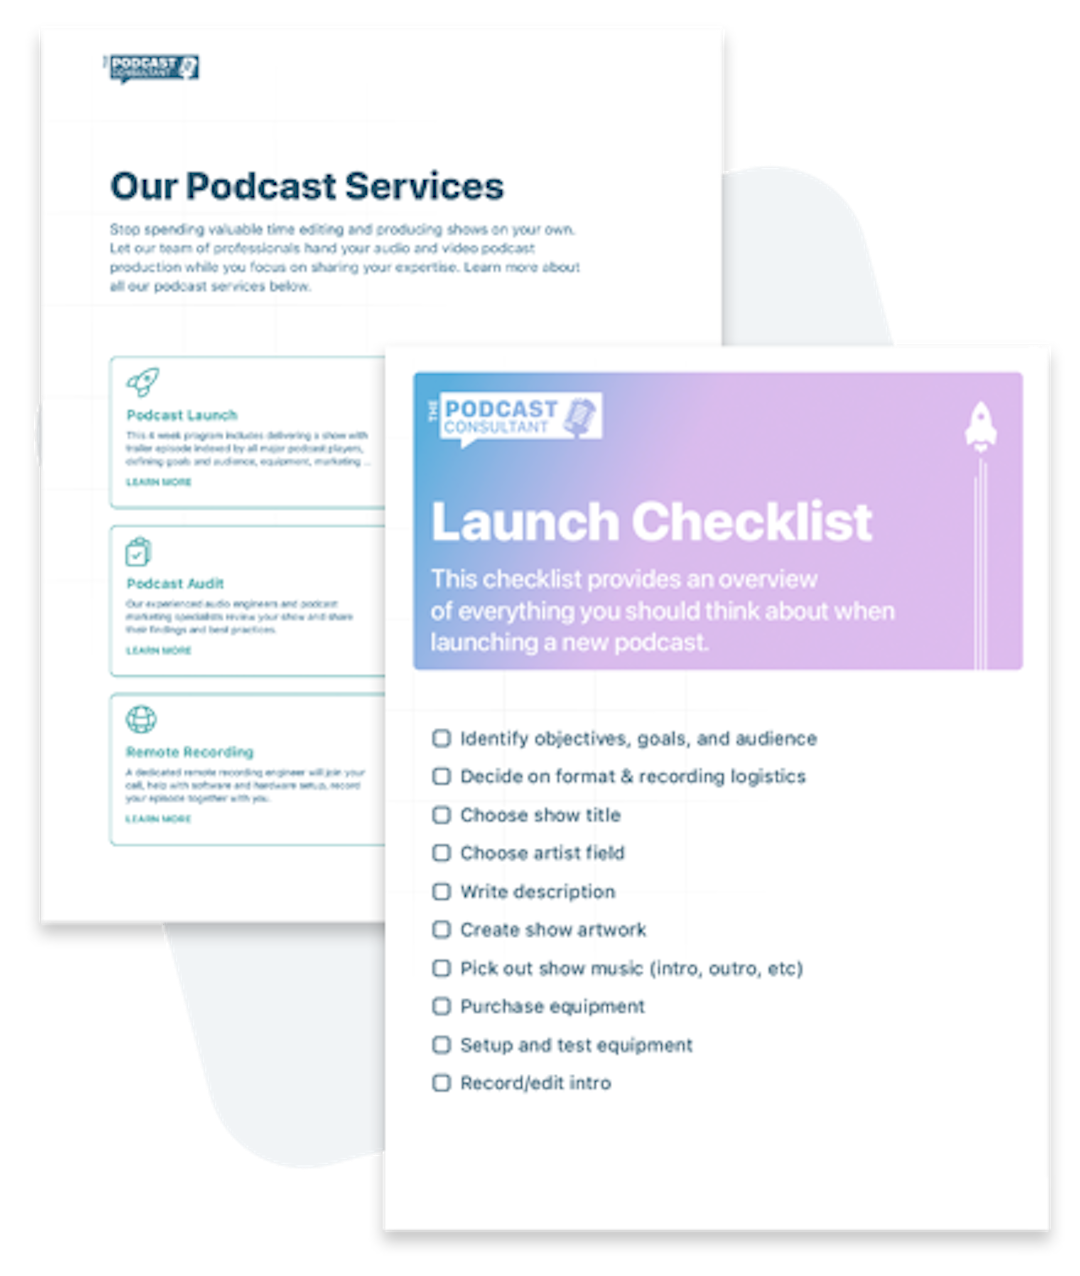 Podcast Launch Checklist